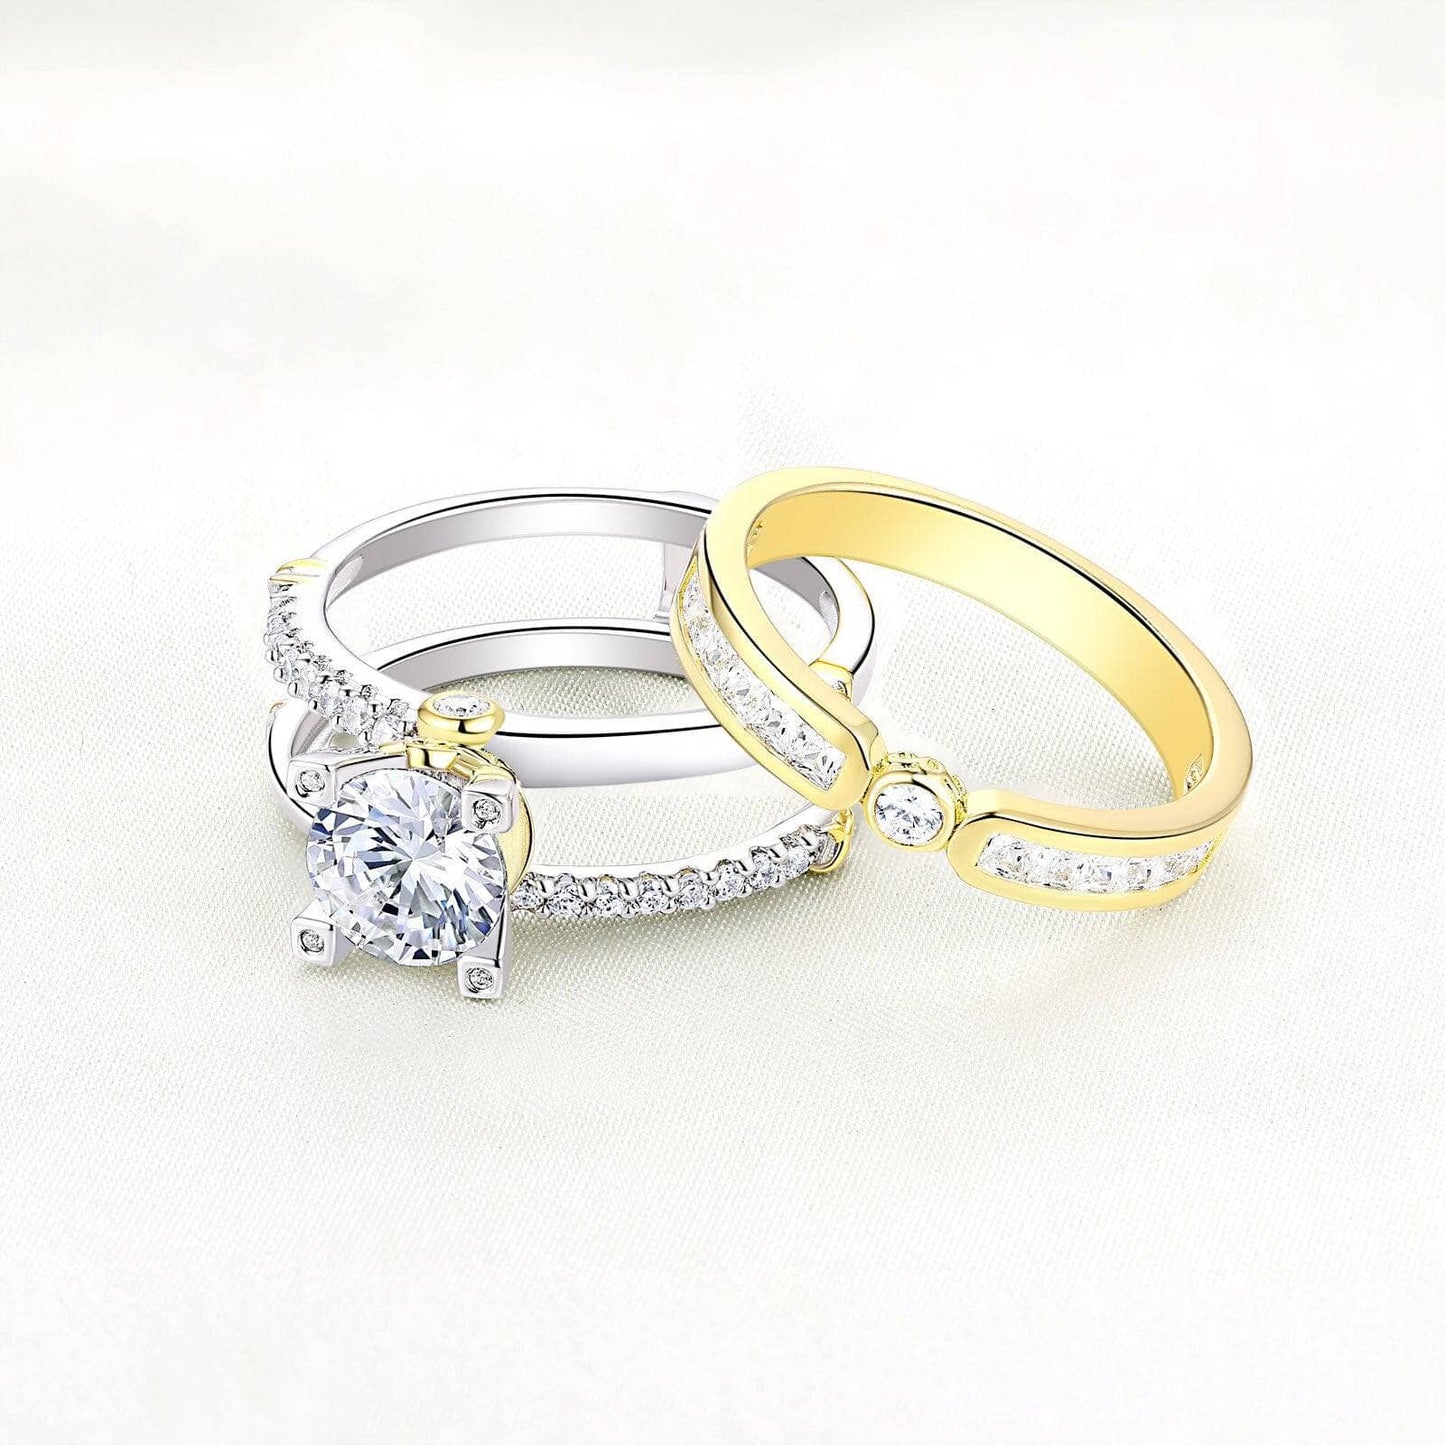 Two Tone Round Cut EVN™ Diamond Wedding Ring Set-Black Diamonds New York